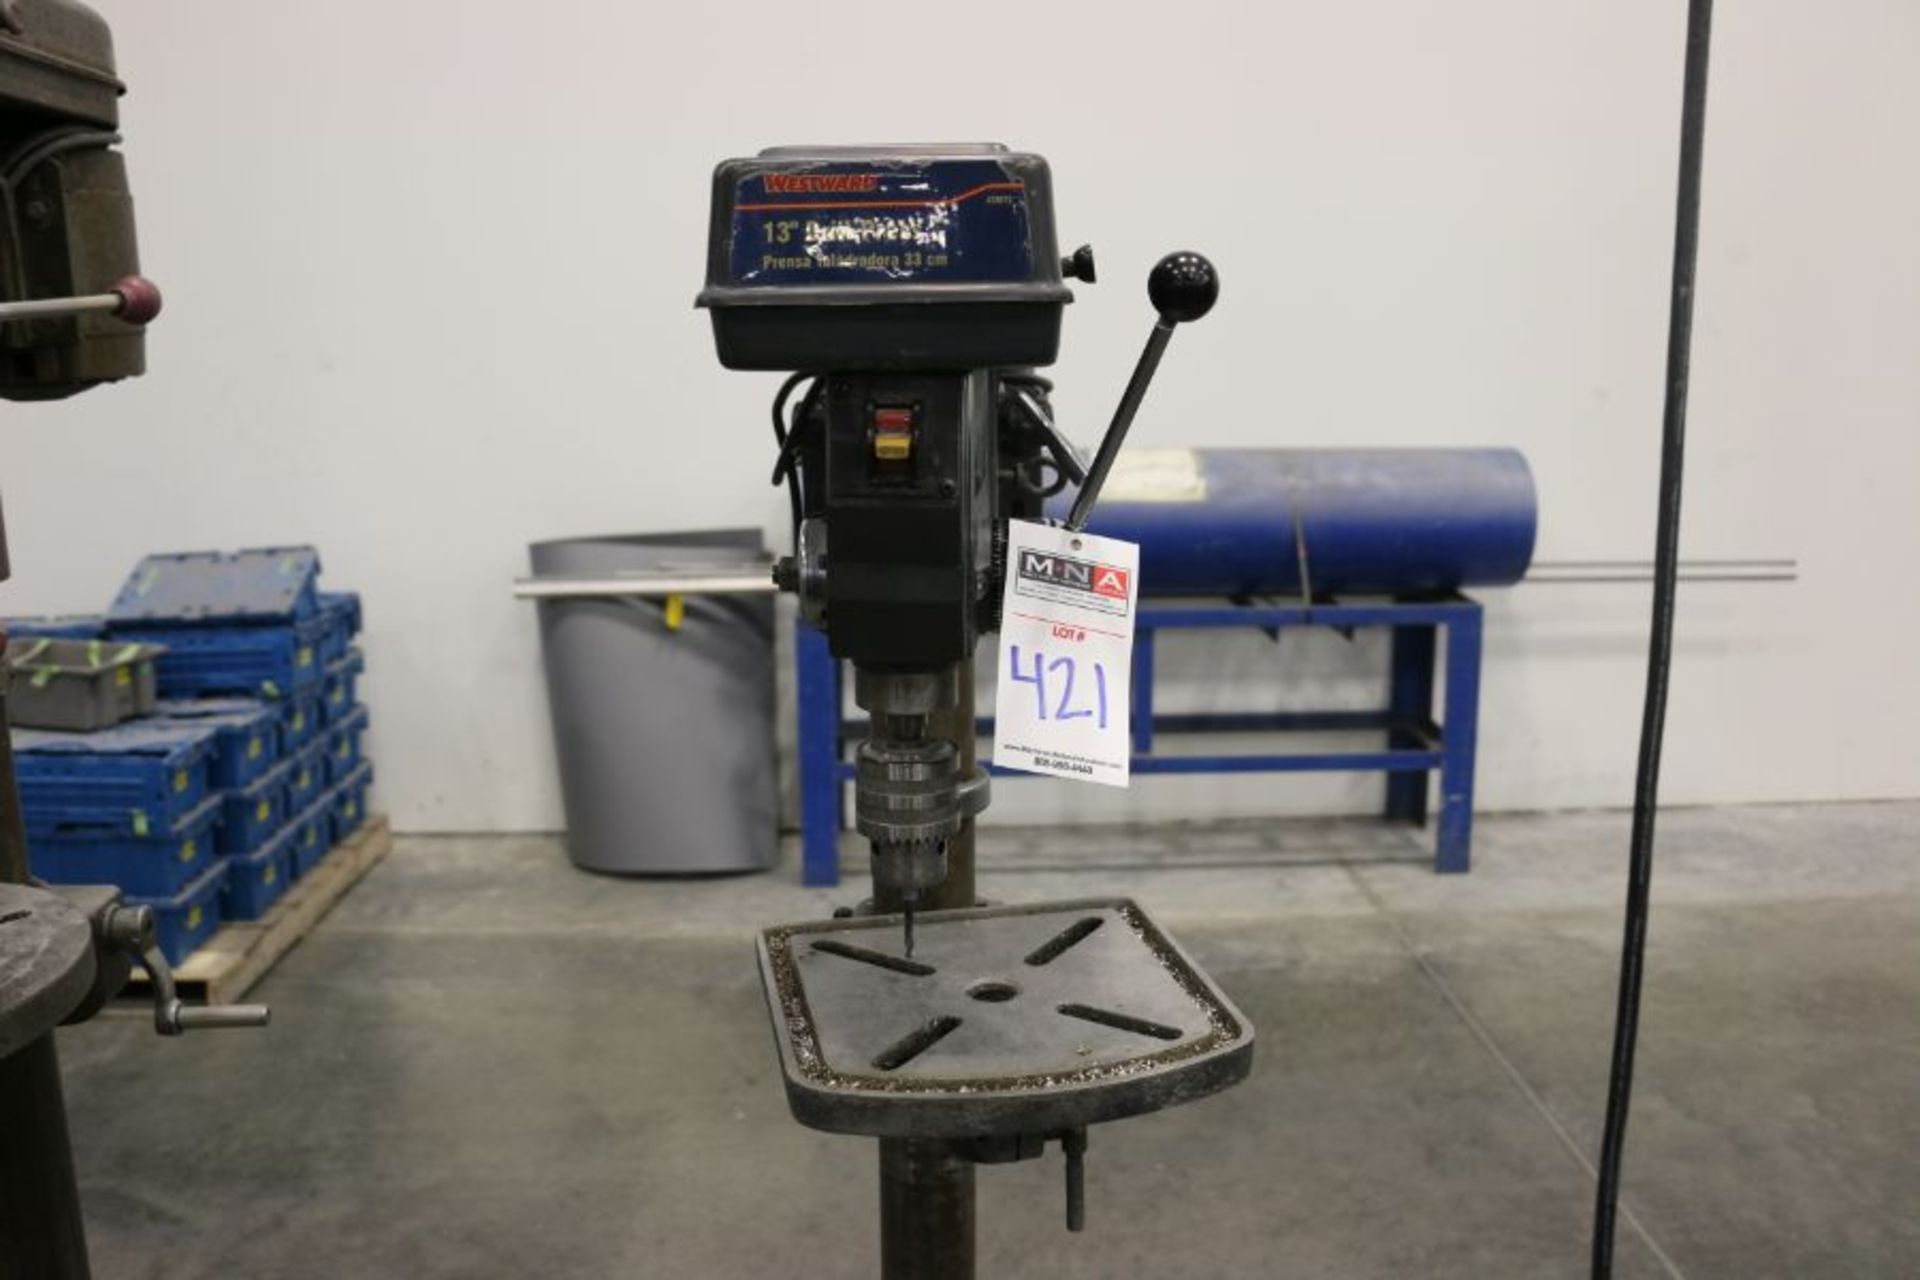 Westward 4TM72 13" Drill Press, 10" x 9" Table, 1HP, 3100RPM, s/n W021251 - Image 2 of 5